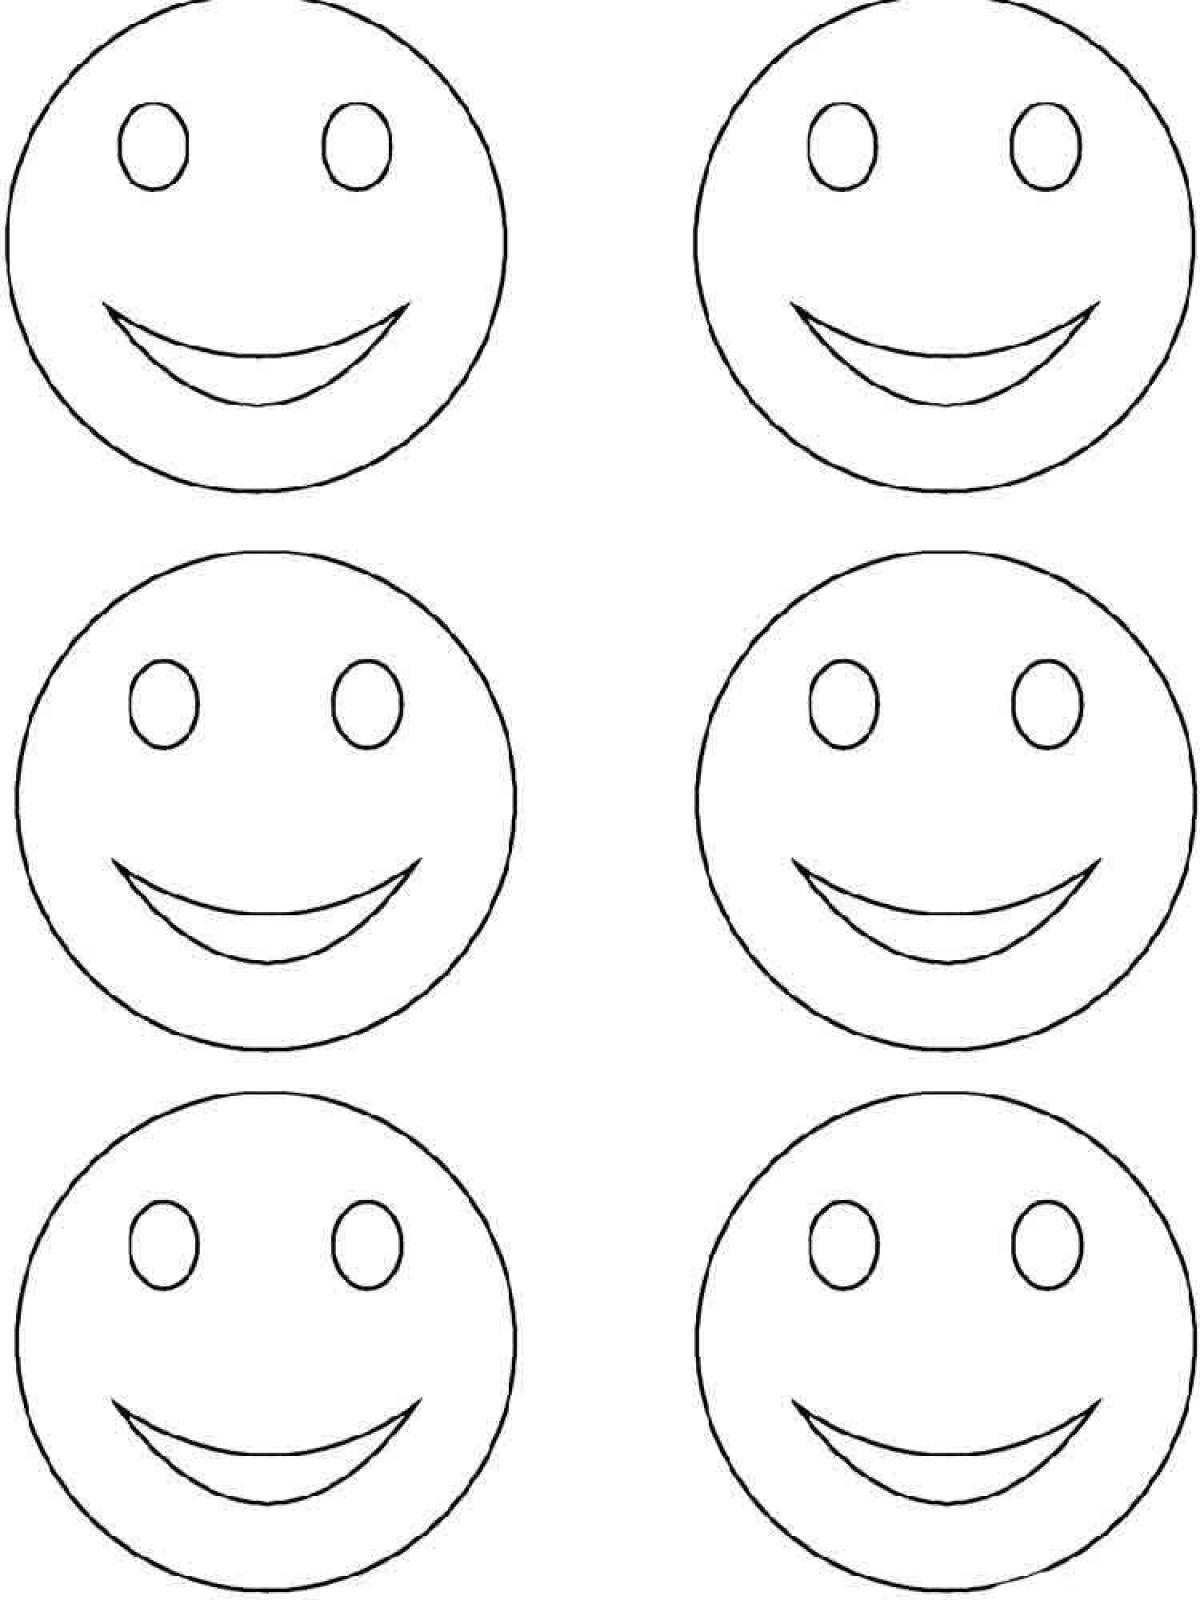 Playful printable emoji coloring page